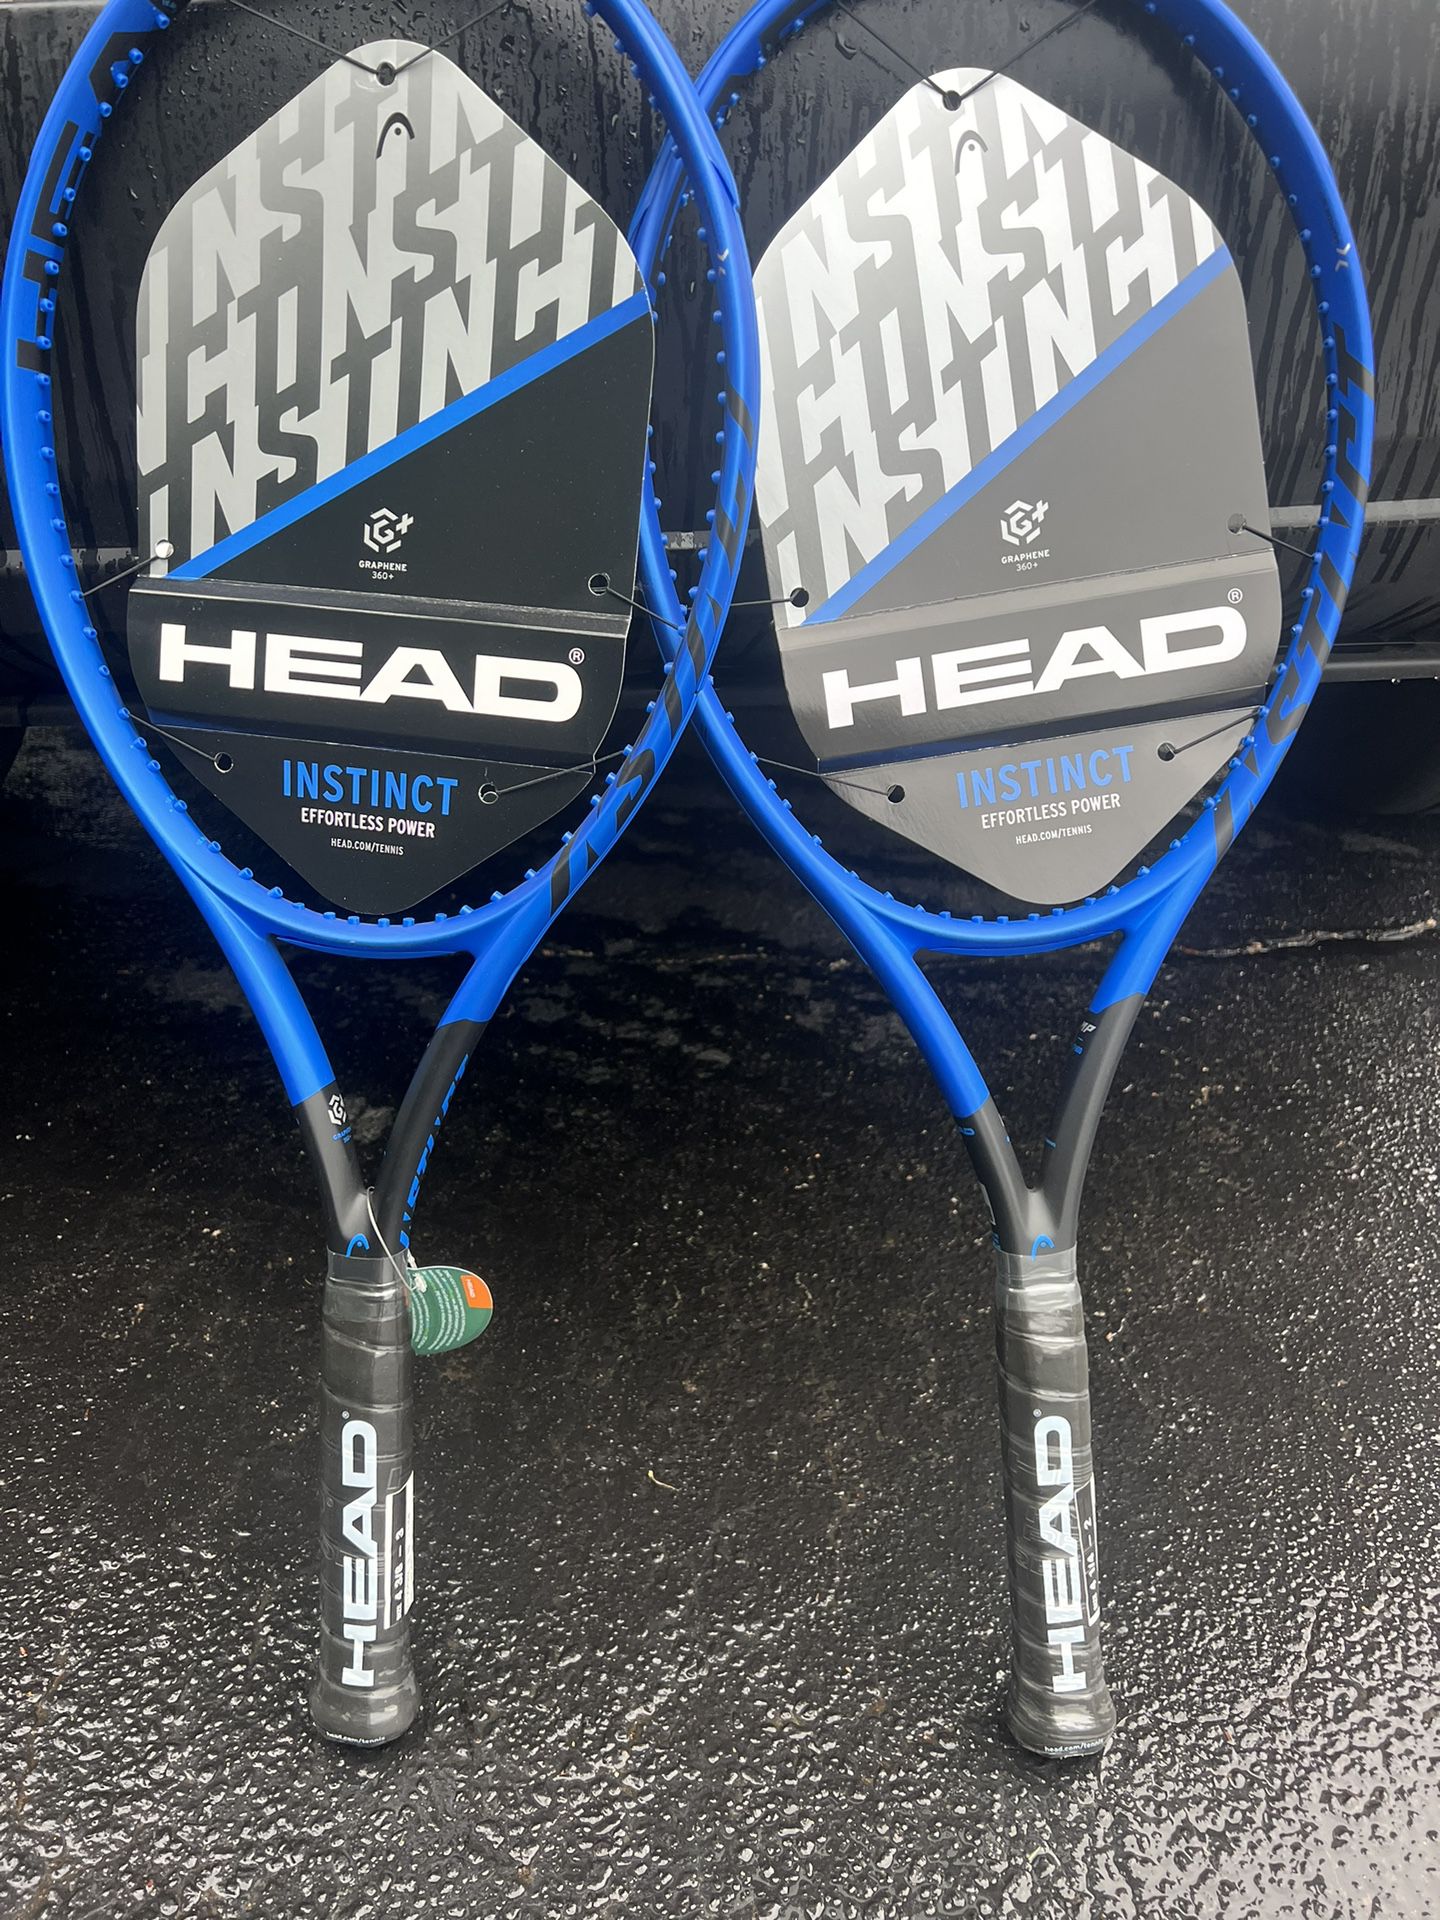 New Head Instinct MP rackets